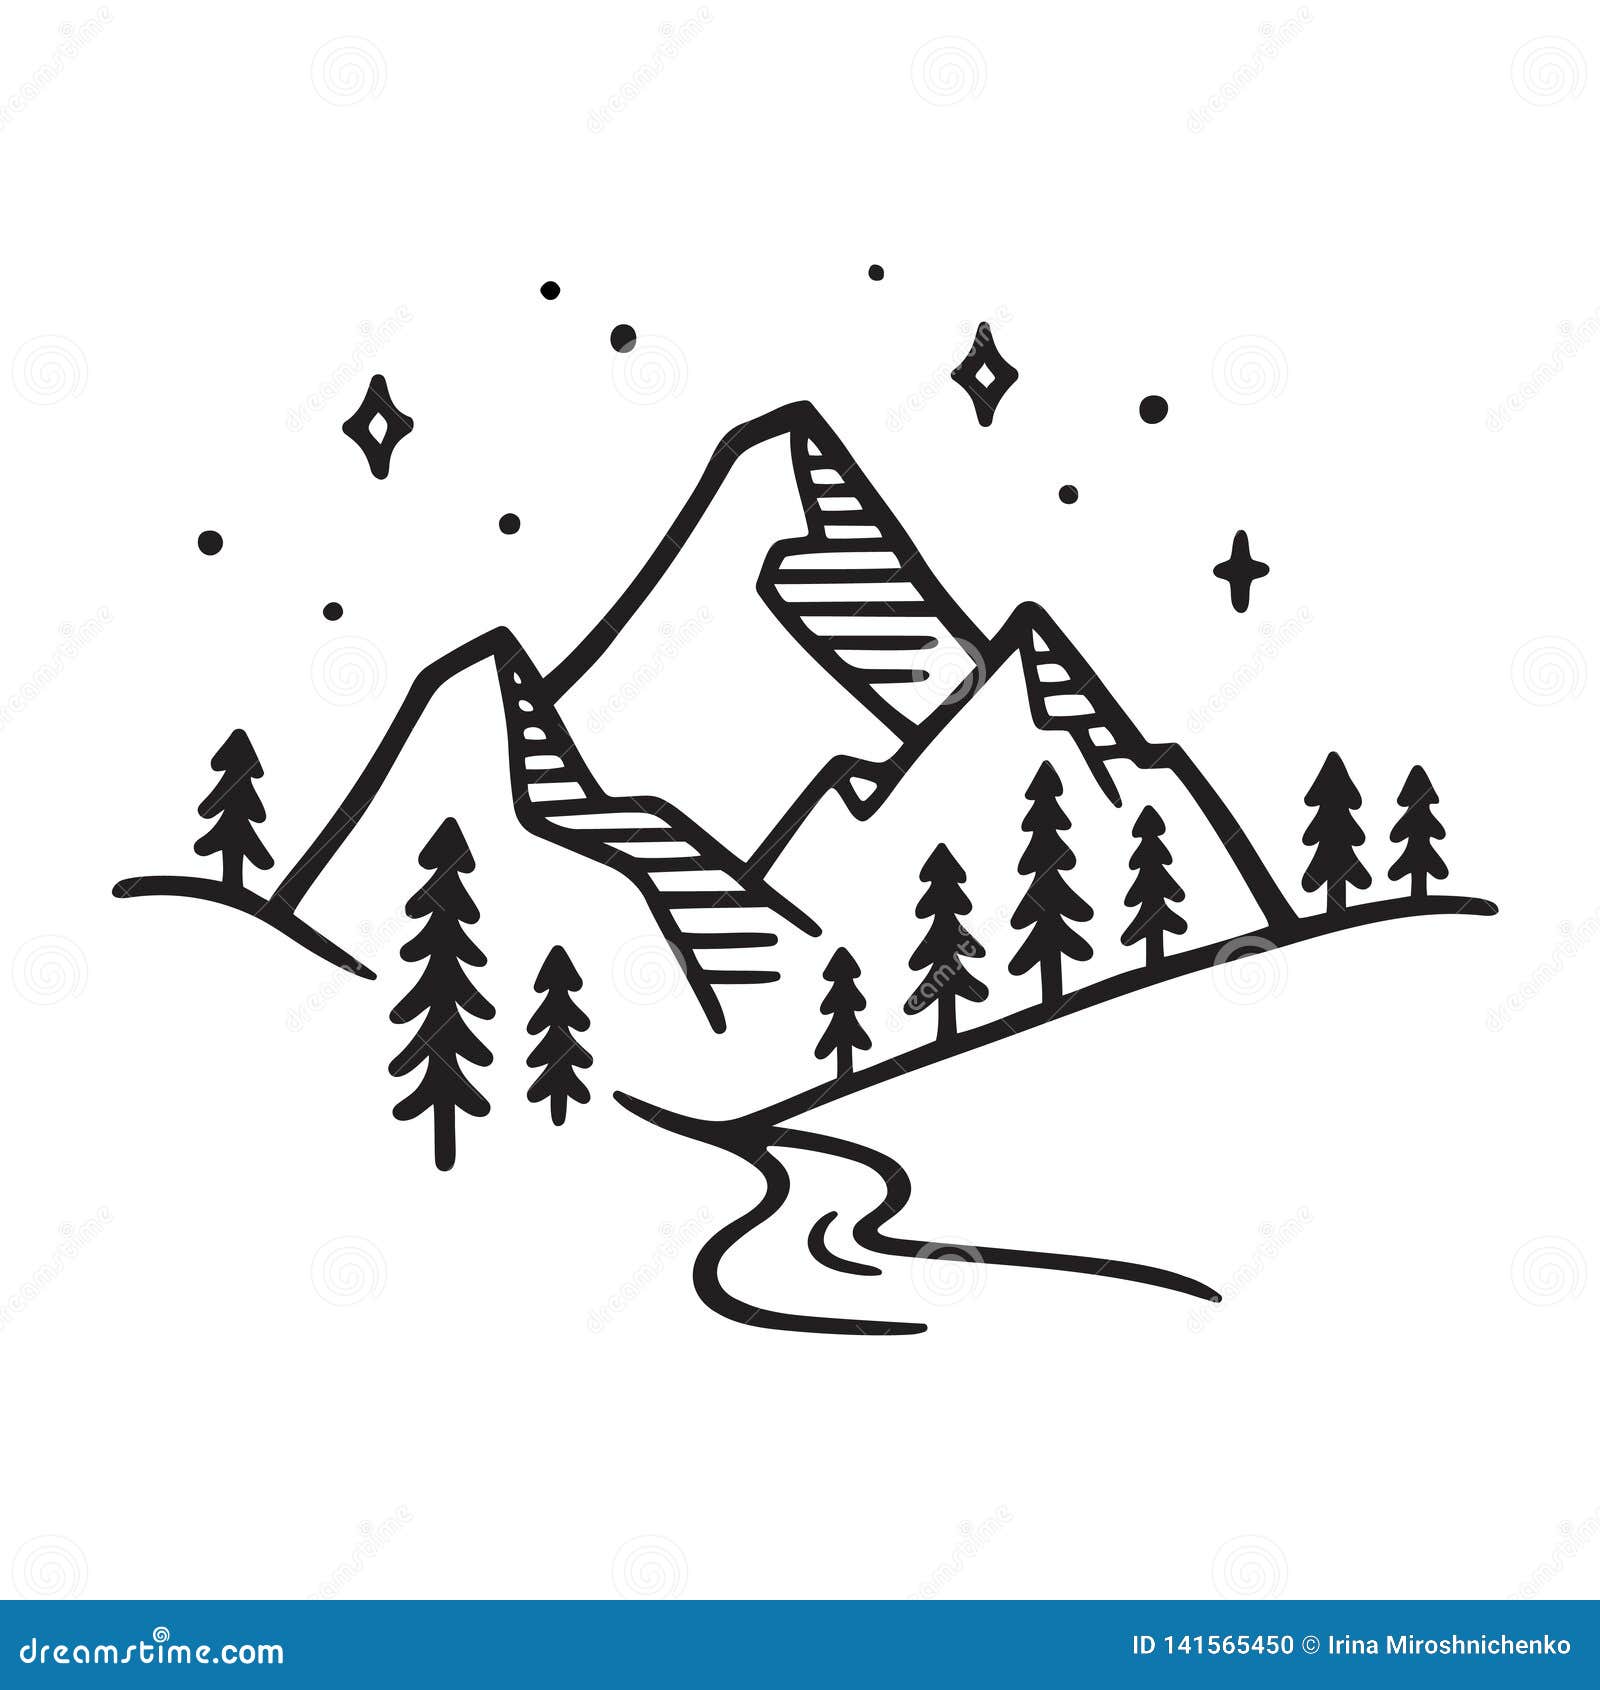 90+ Free Mountain Sketch & Sketch Images - Pixabay-tmf.edu.vn